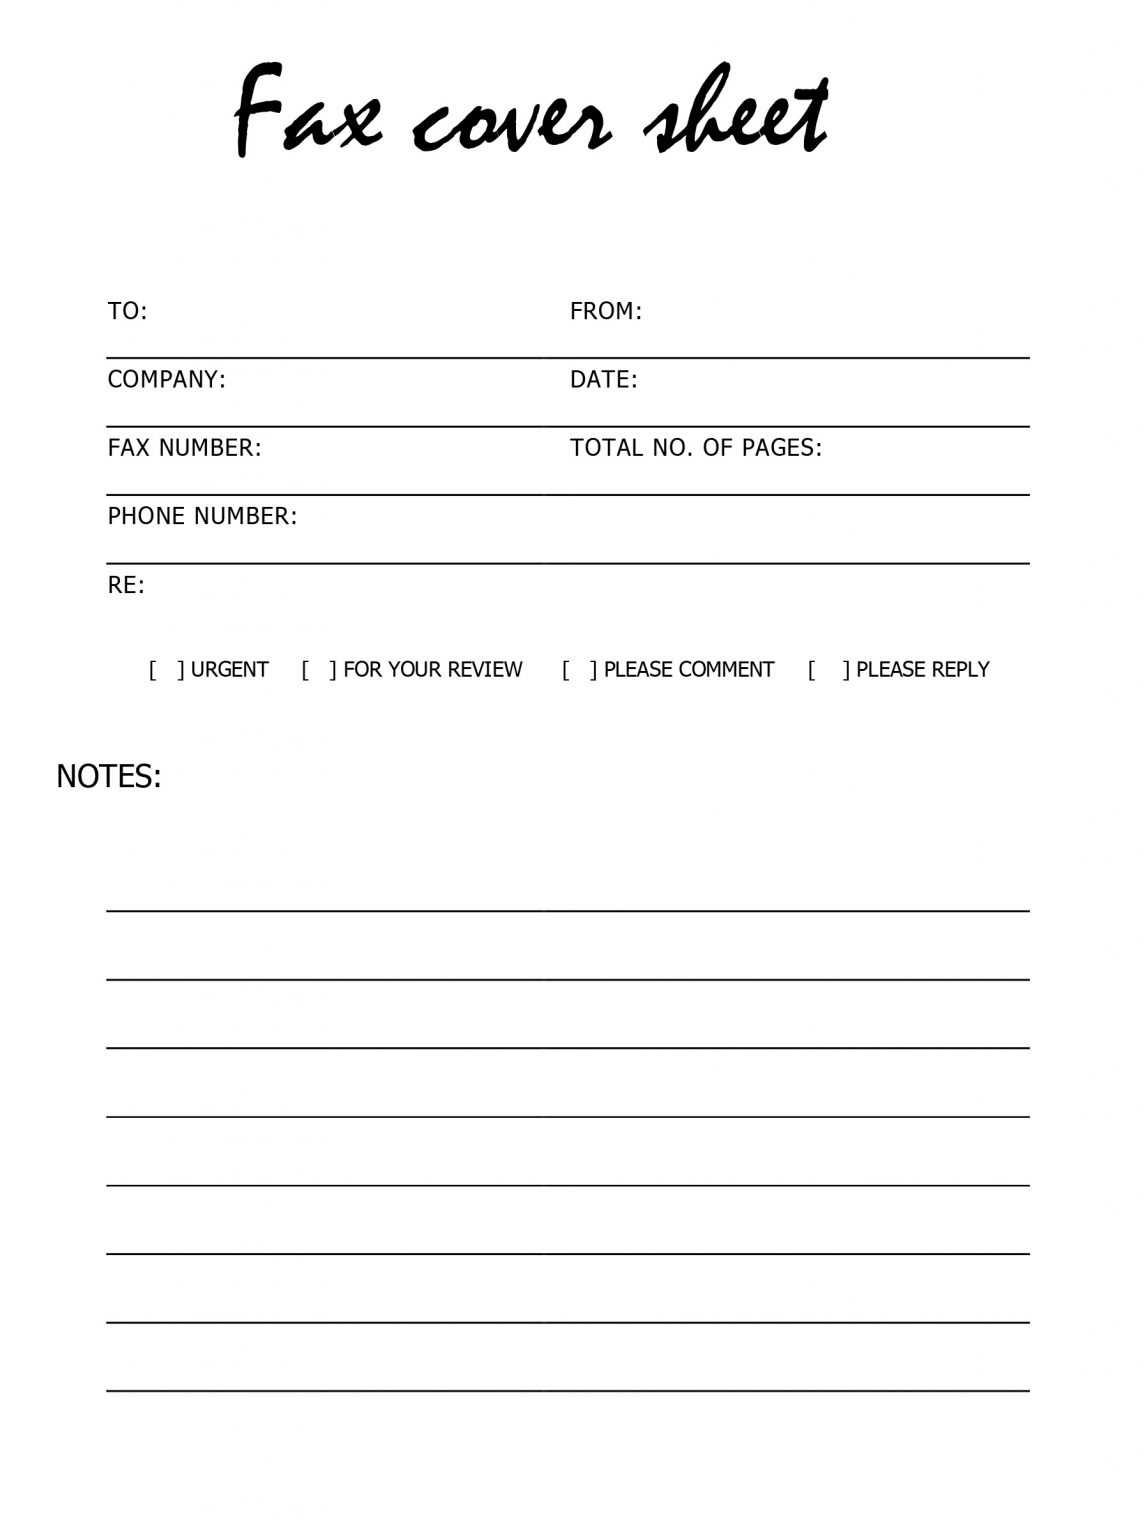 free fax cover sheet template pdf word google docs faq